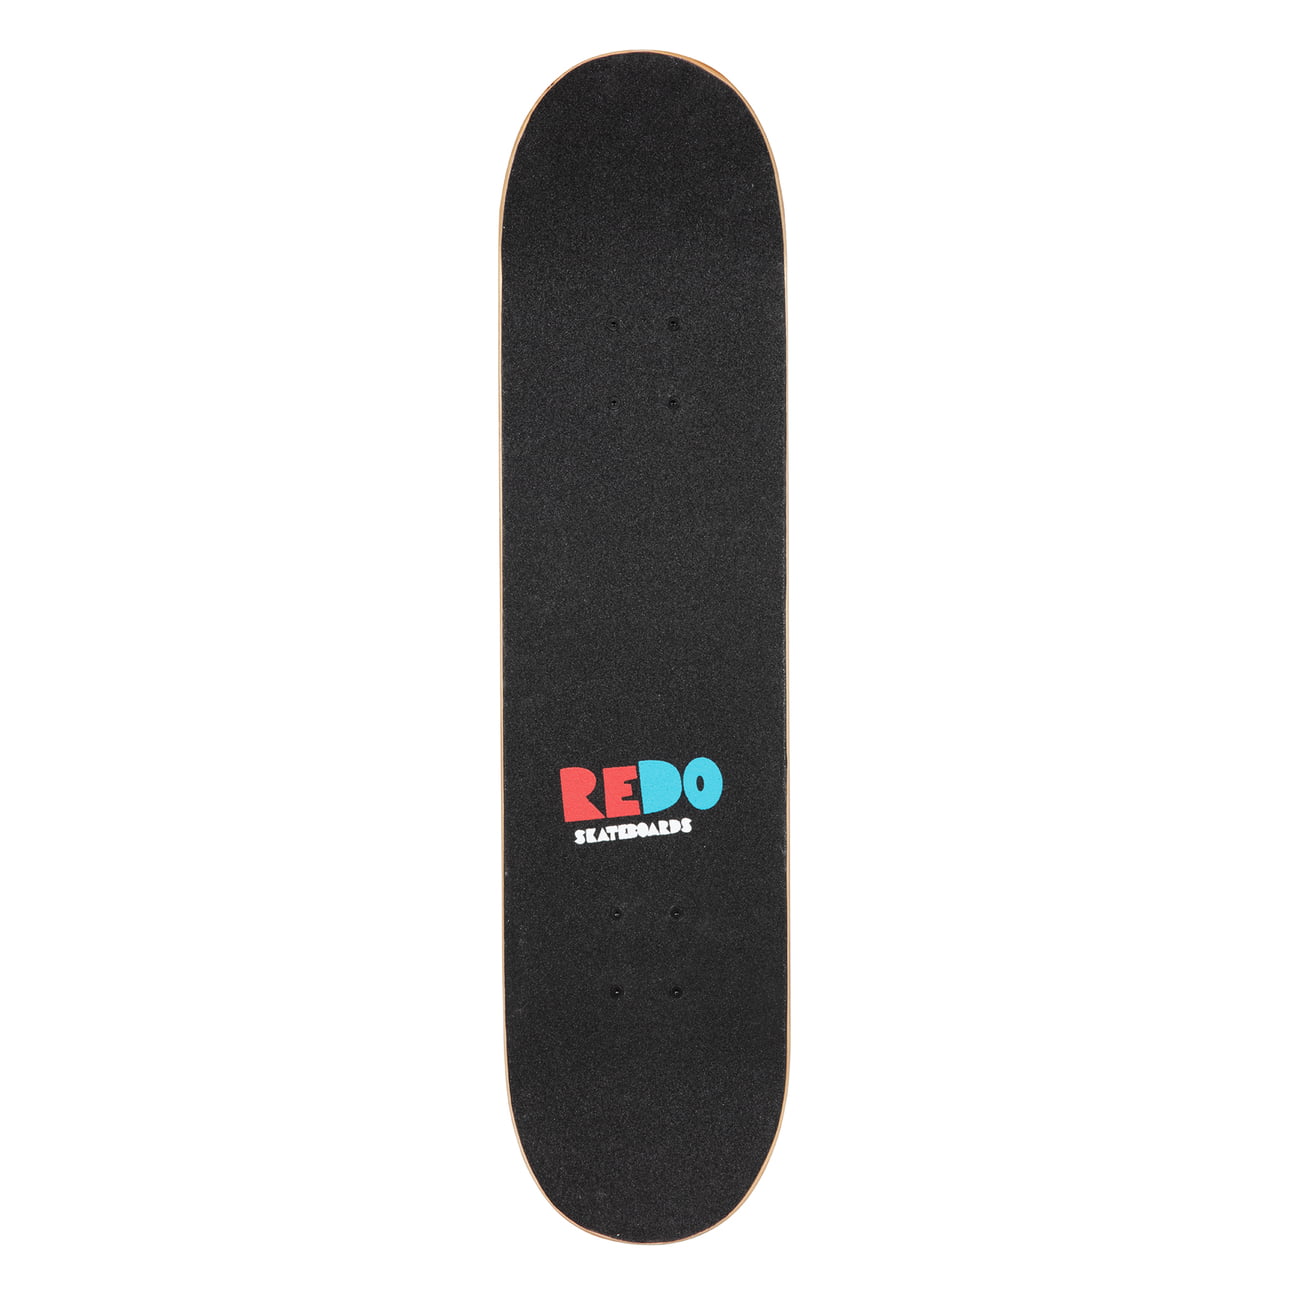 ReDo Skateboard 31 x 7.675 Rubber Duck Pop Complete Skateboard for Boys Girls Kids Teens 